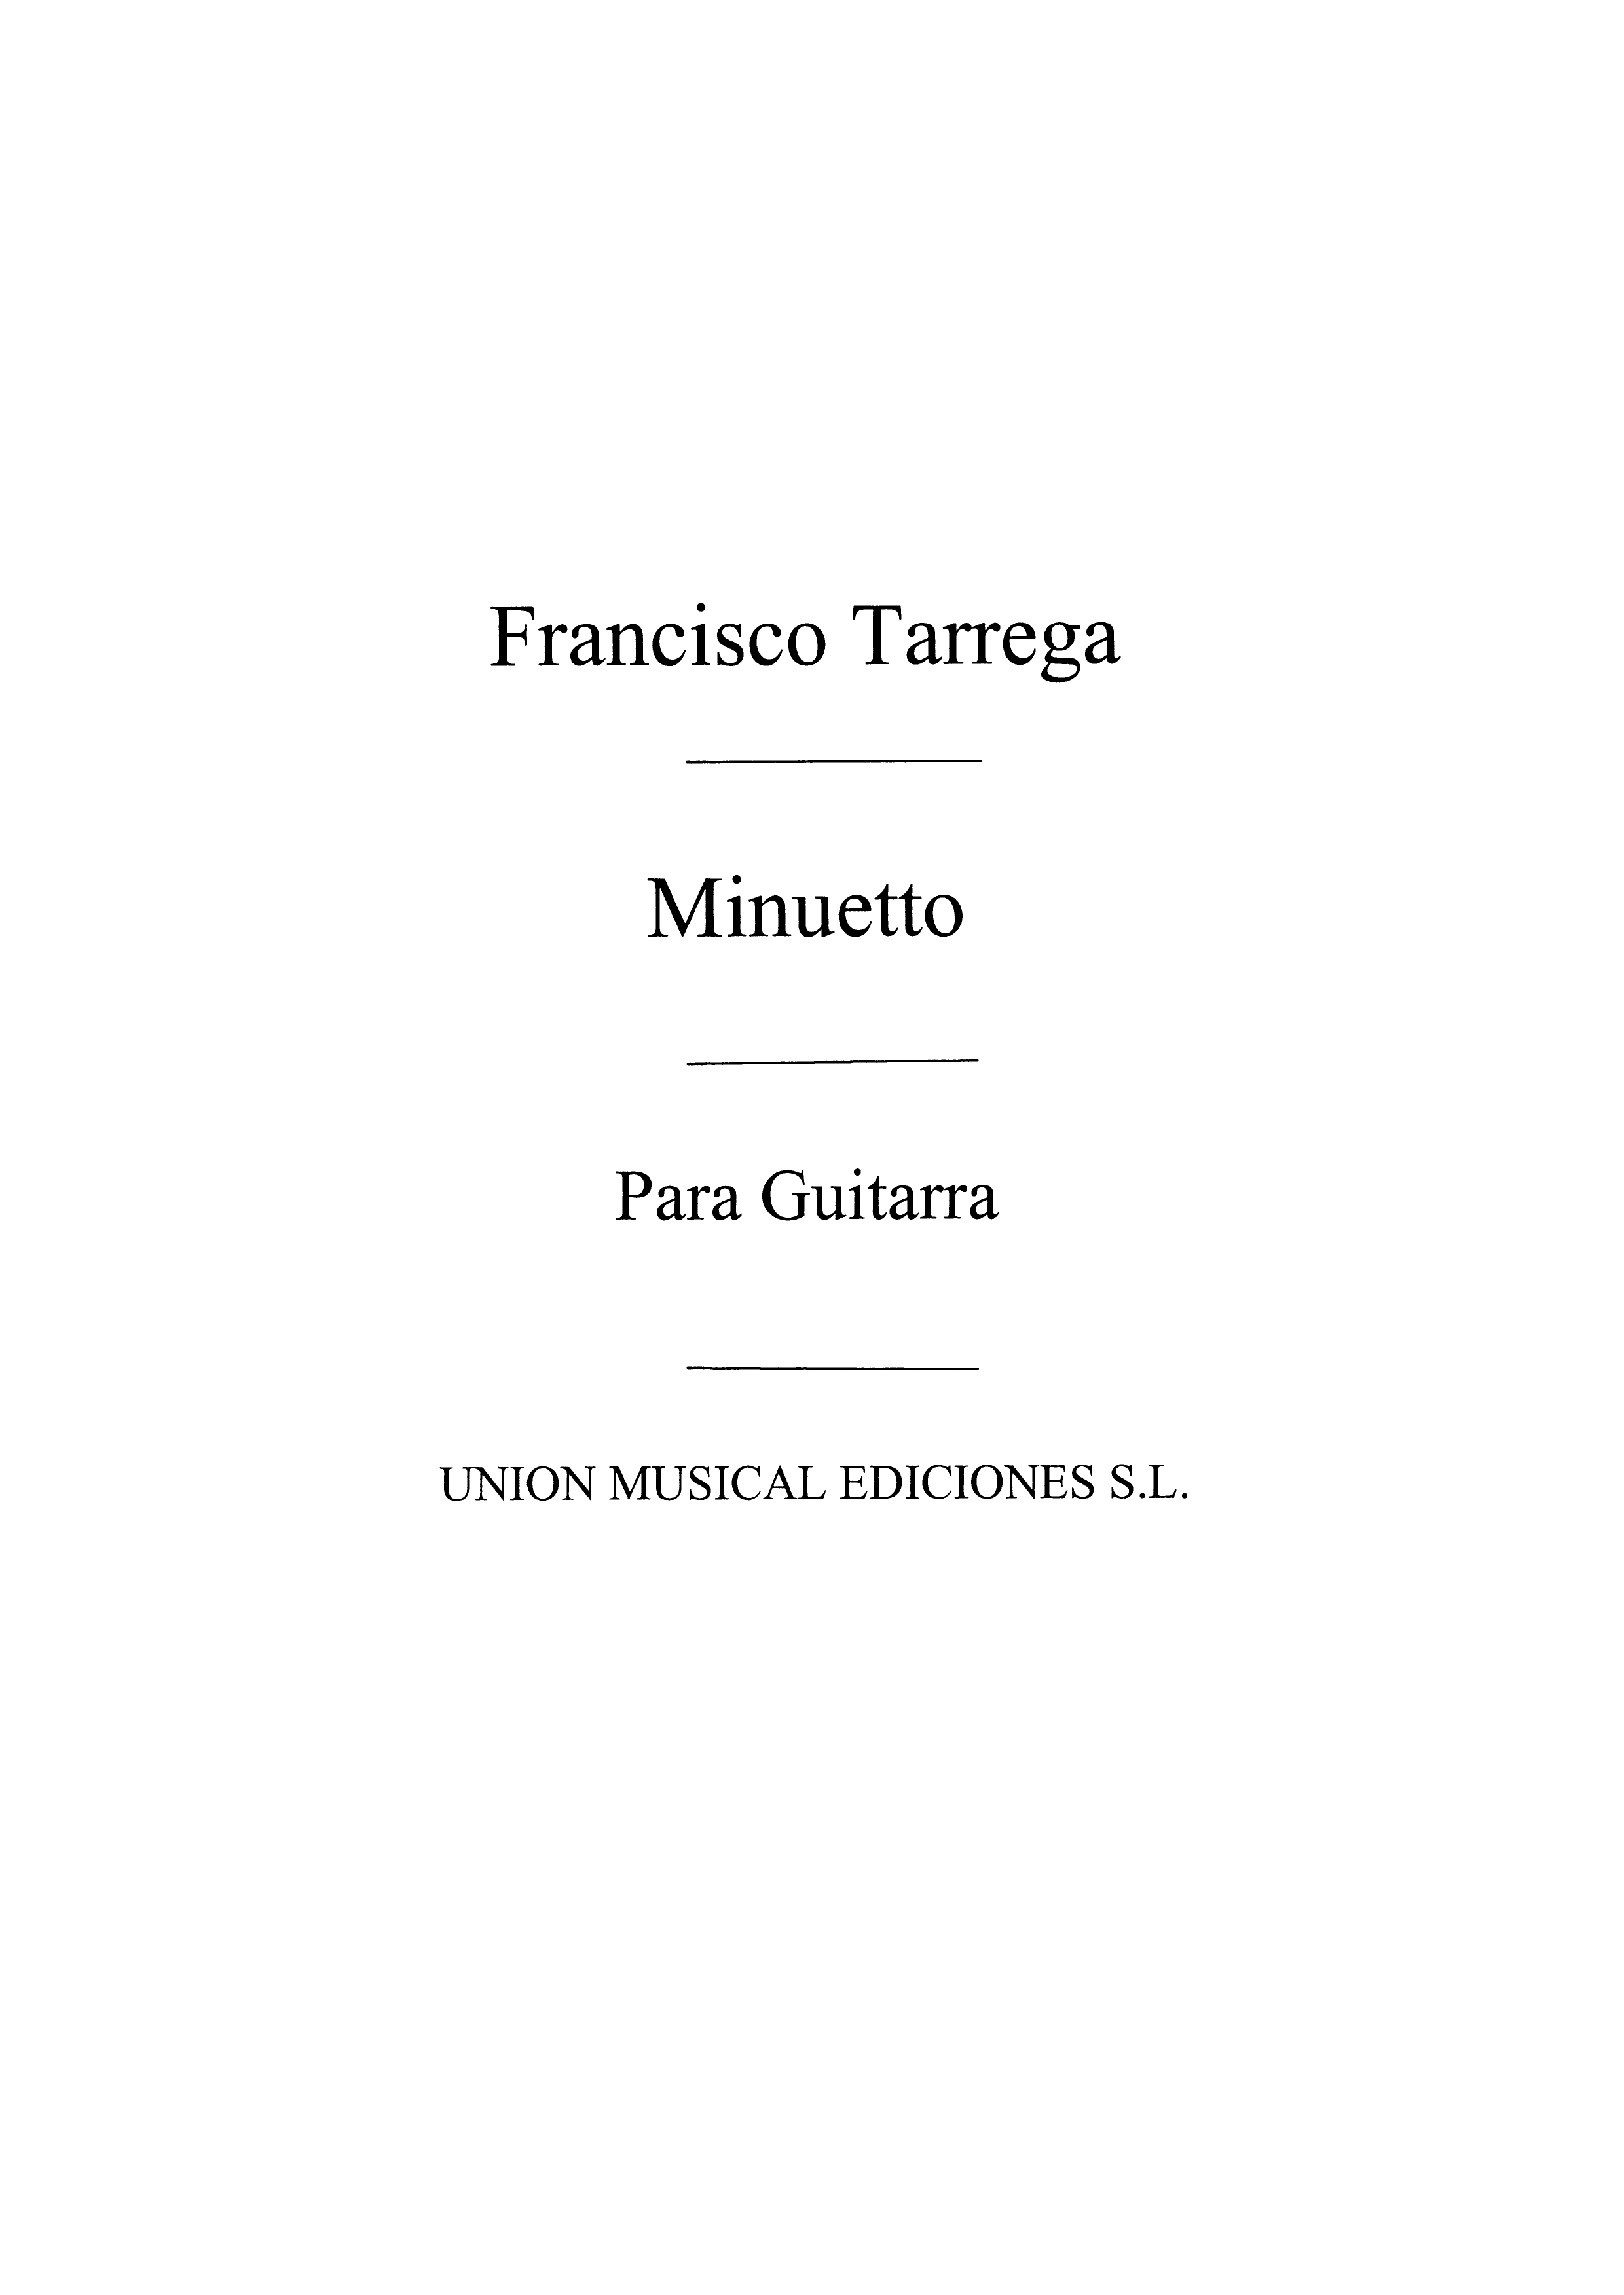 Francisco Trrega: Minuetto: Guitar: Instrumental Work